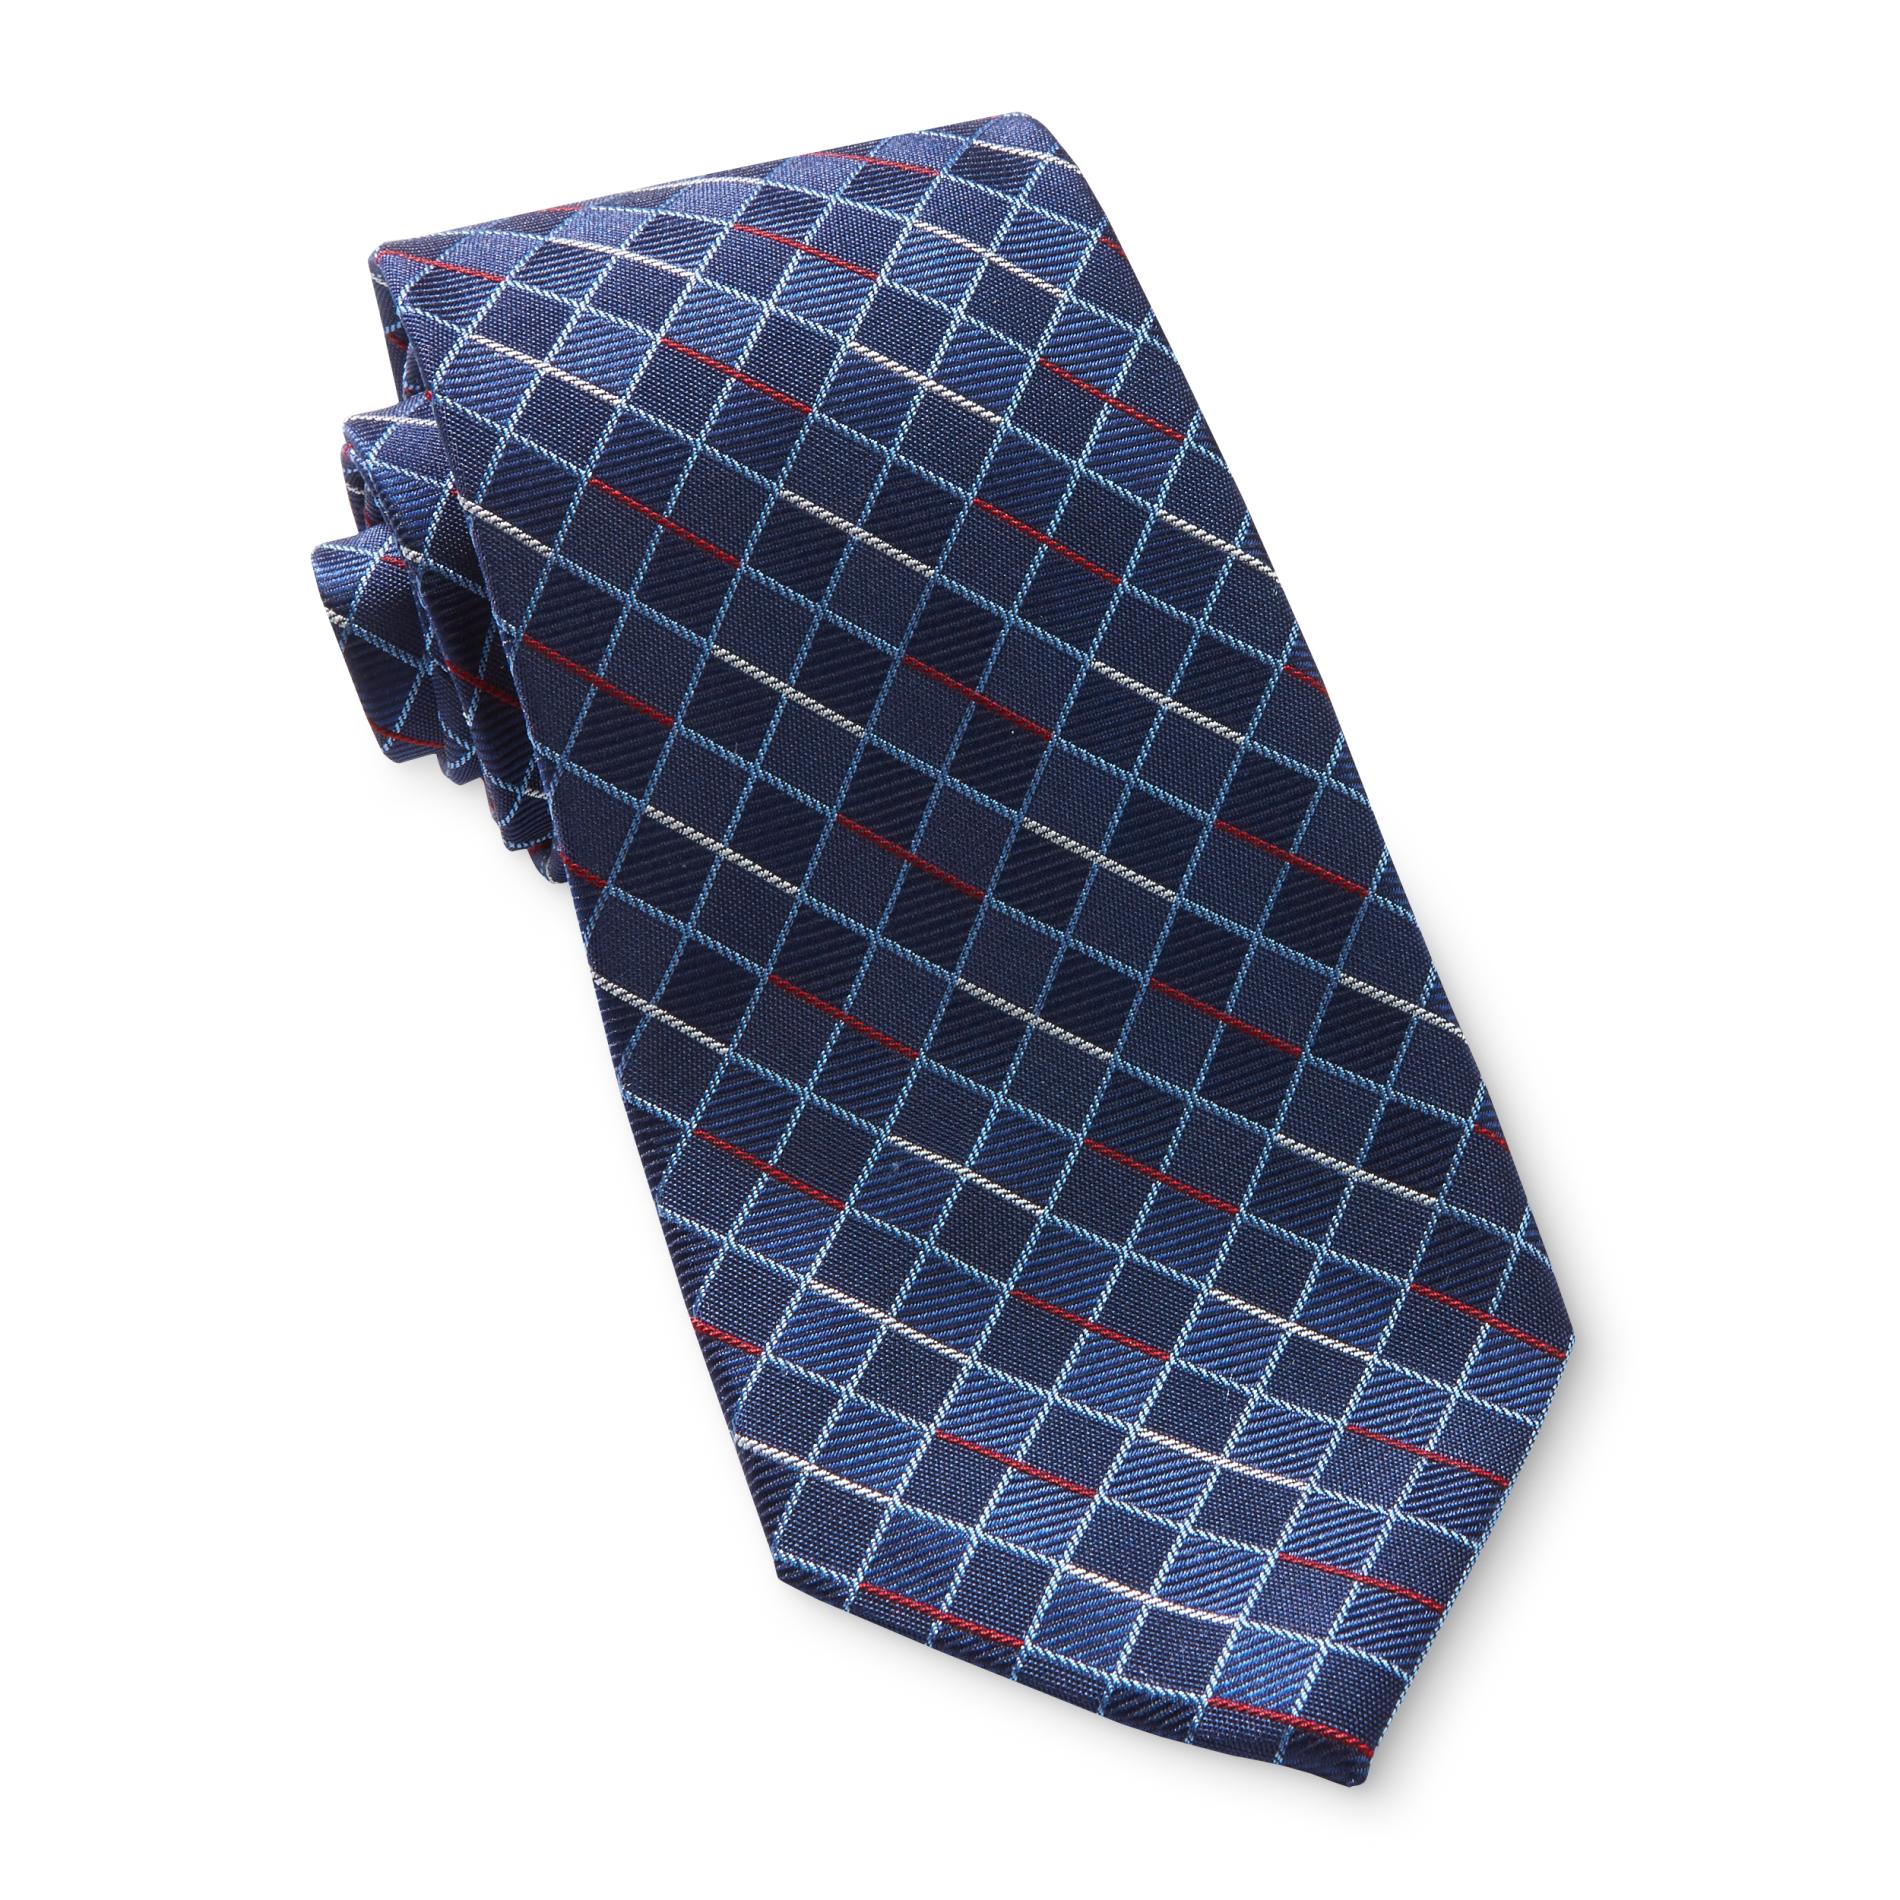 Dockers Men's Necktie - Grid Pattern